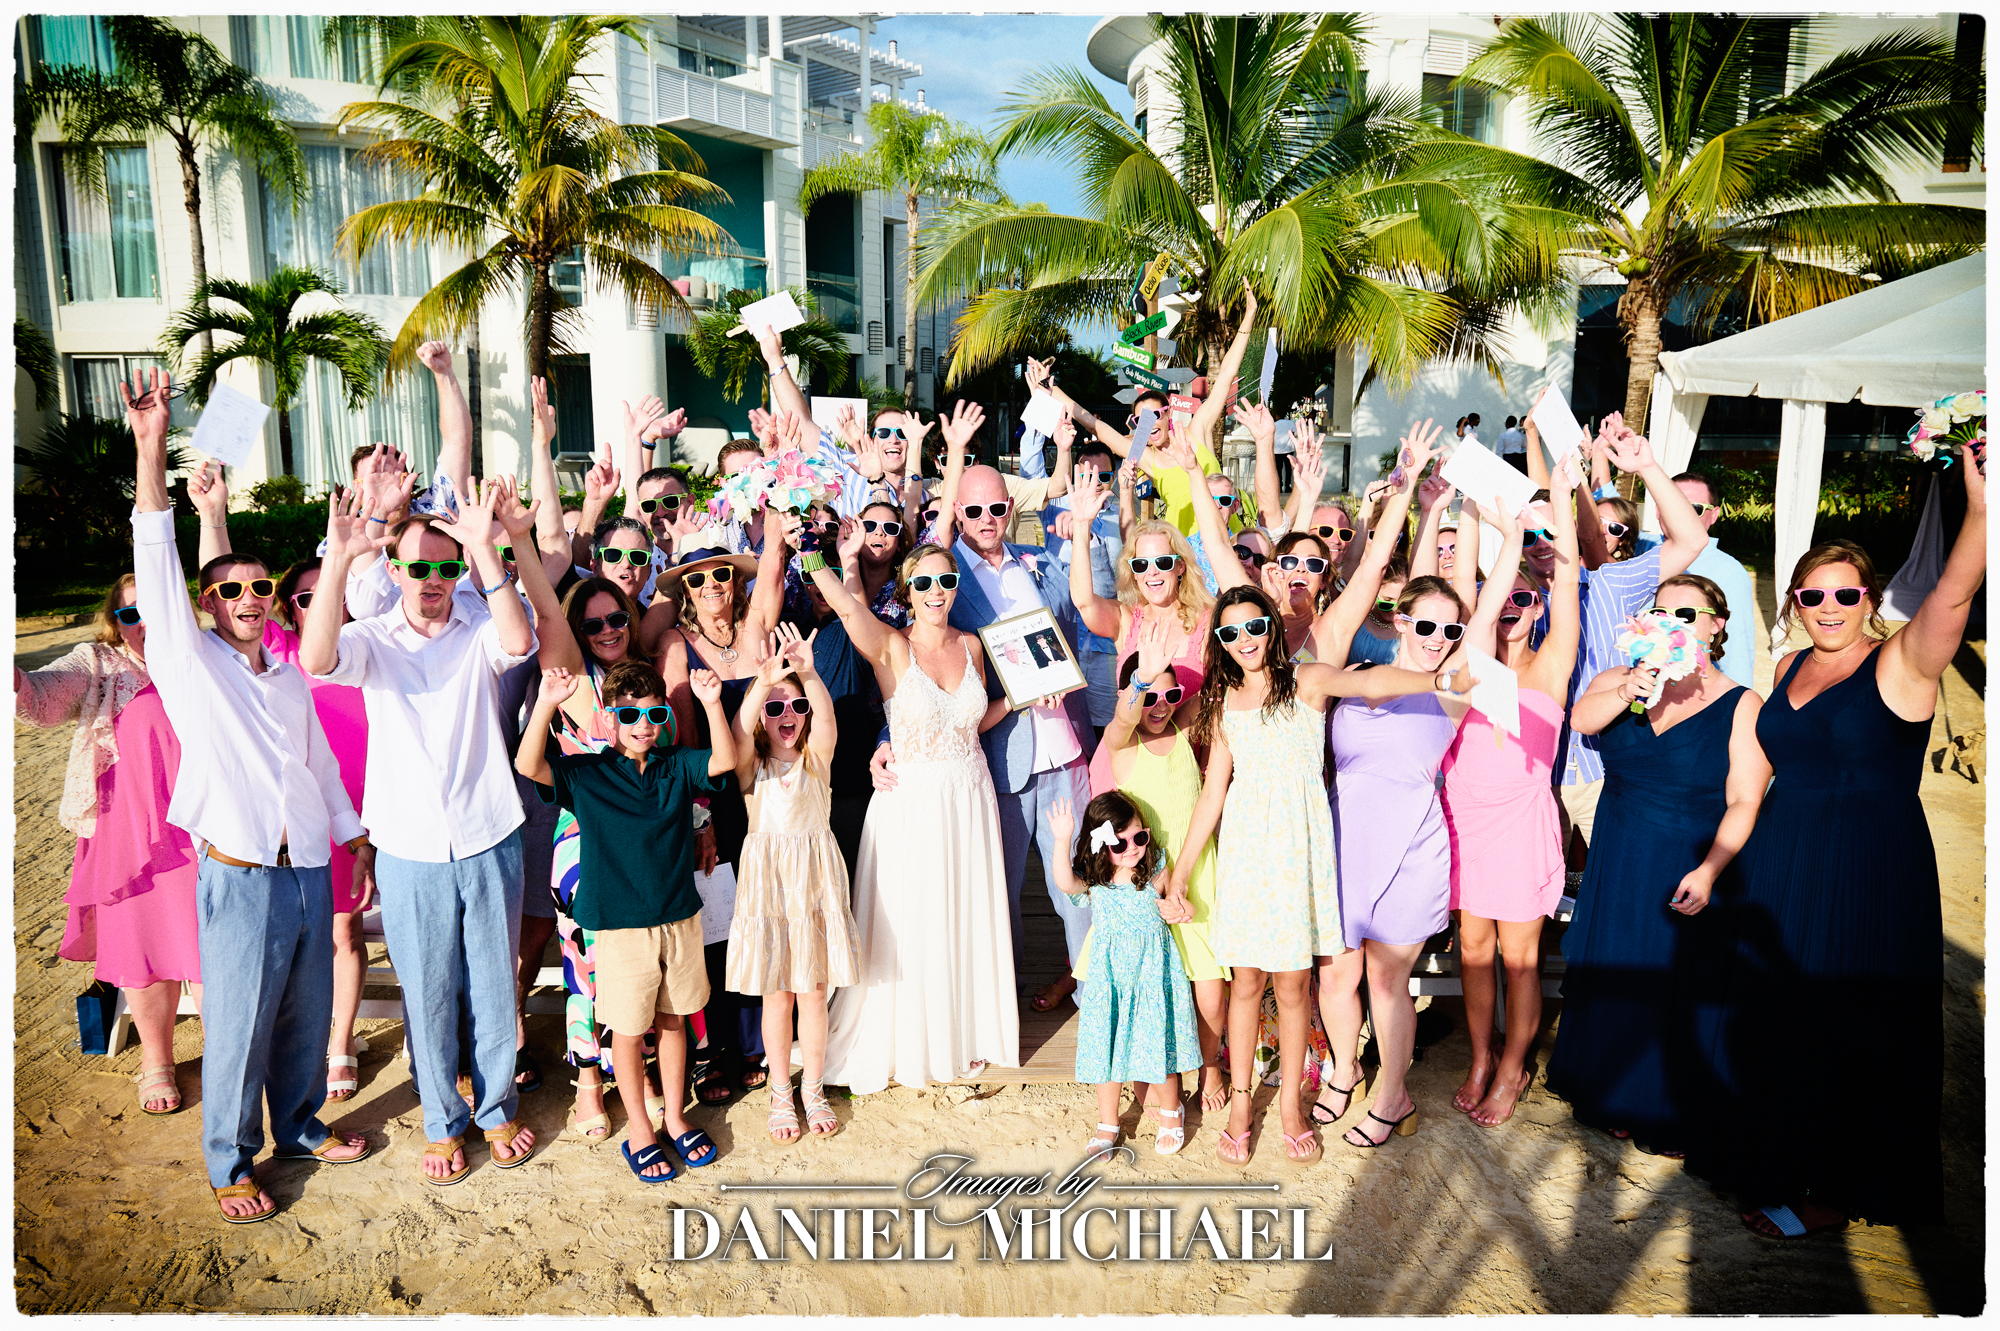 Group Photo at Destination Wedding Jamaica